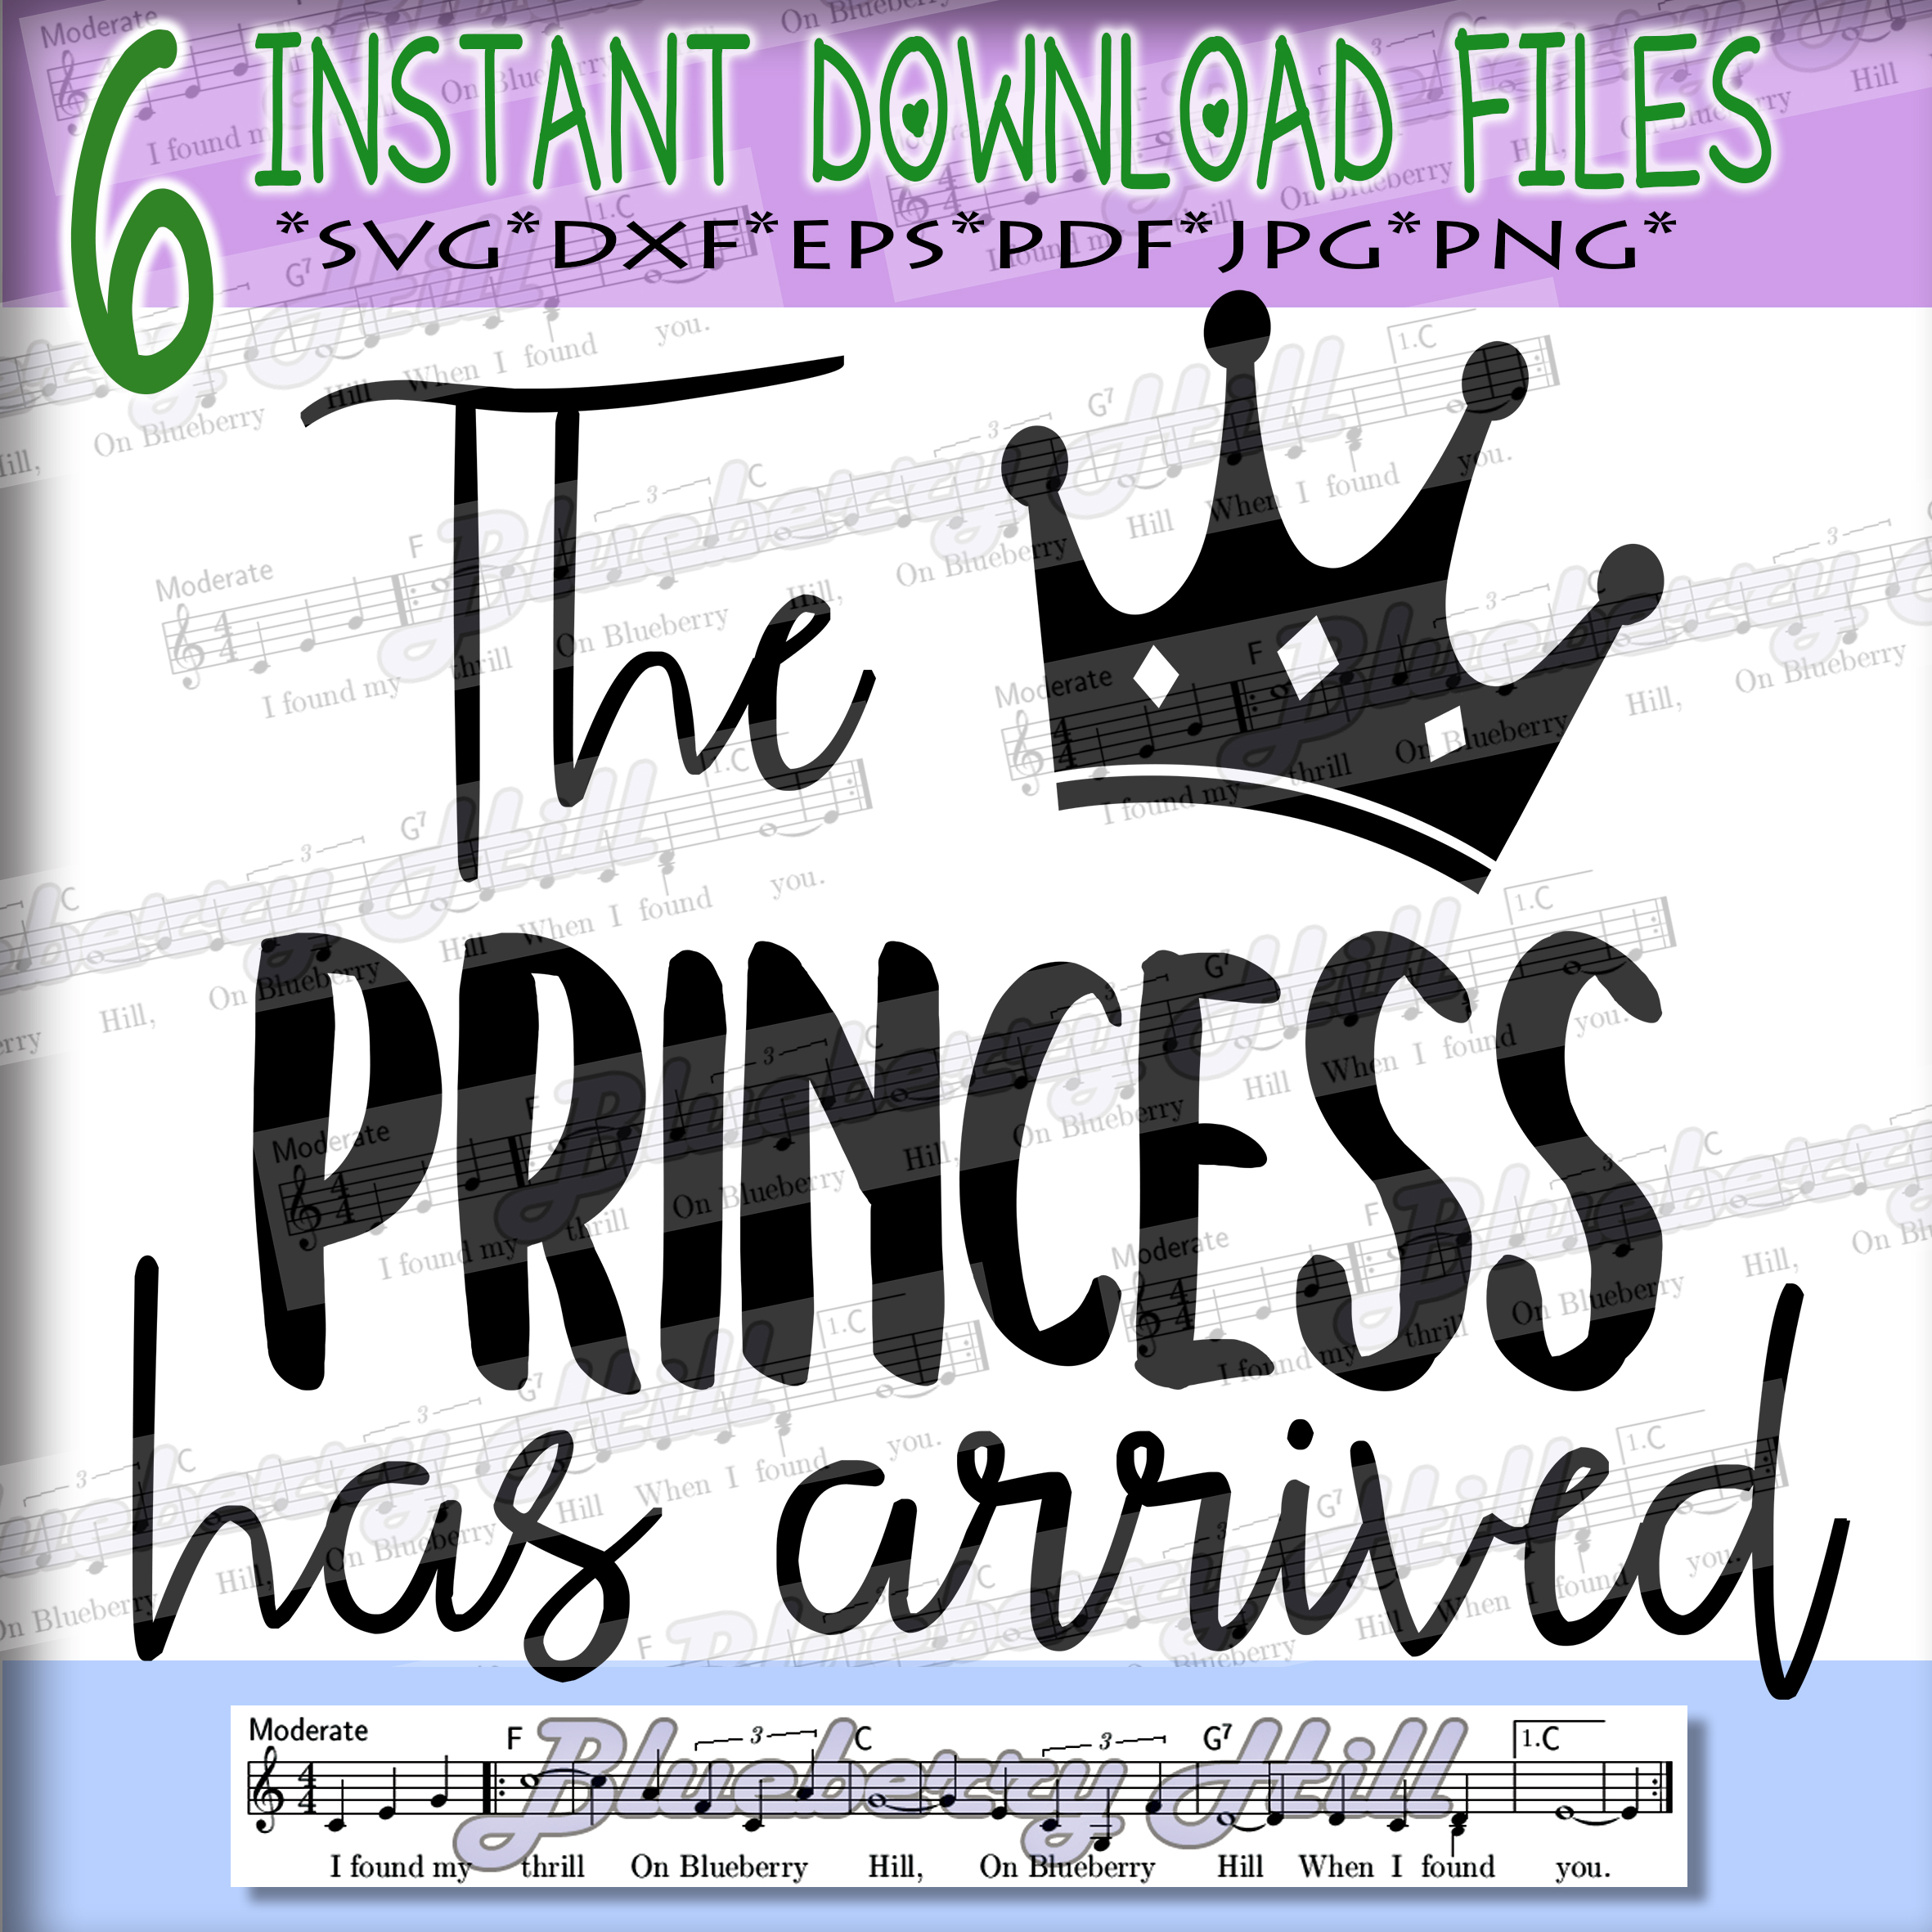 Free Free 171 Svg File The Princess Has Arrived Svg SVG PNG EPS DXF File